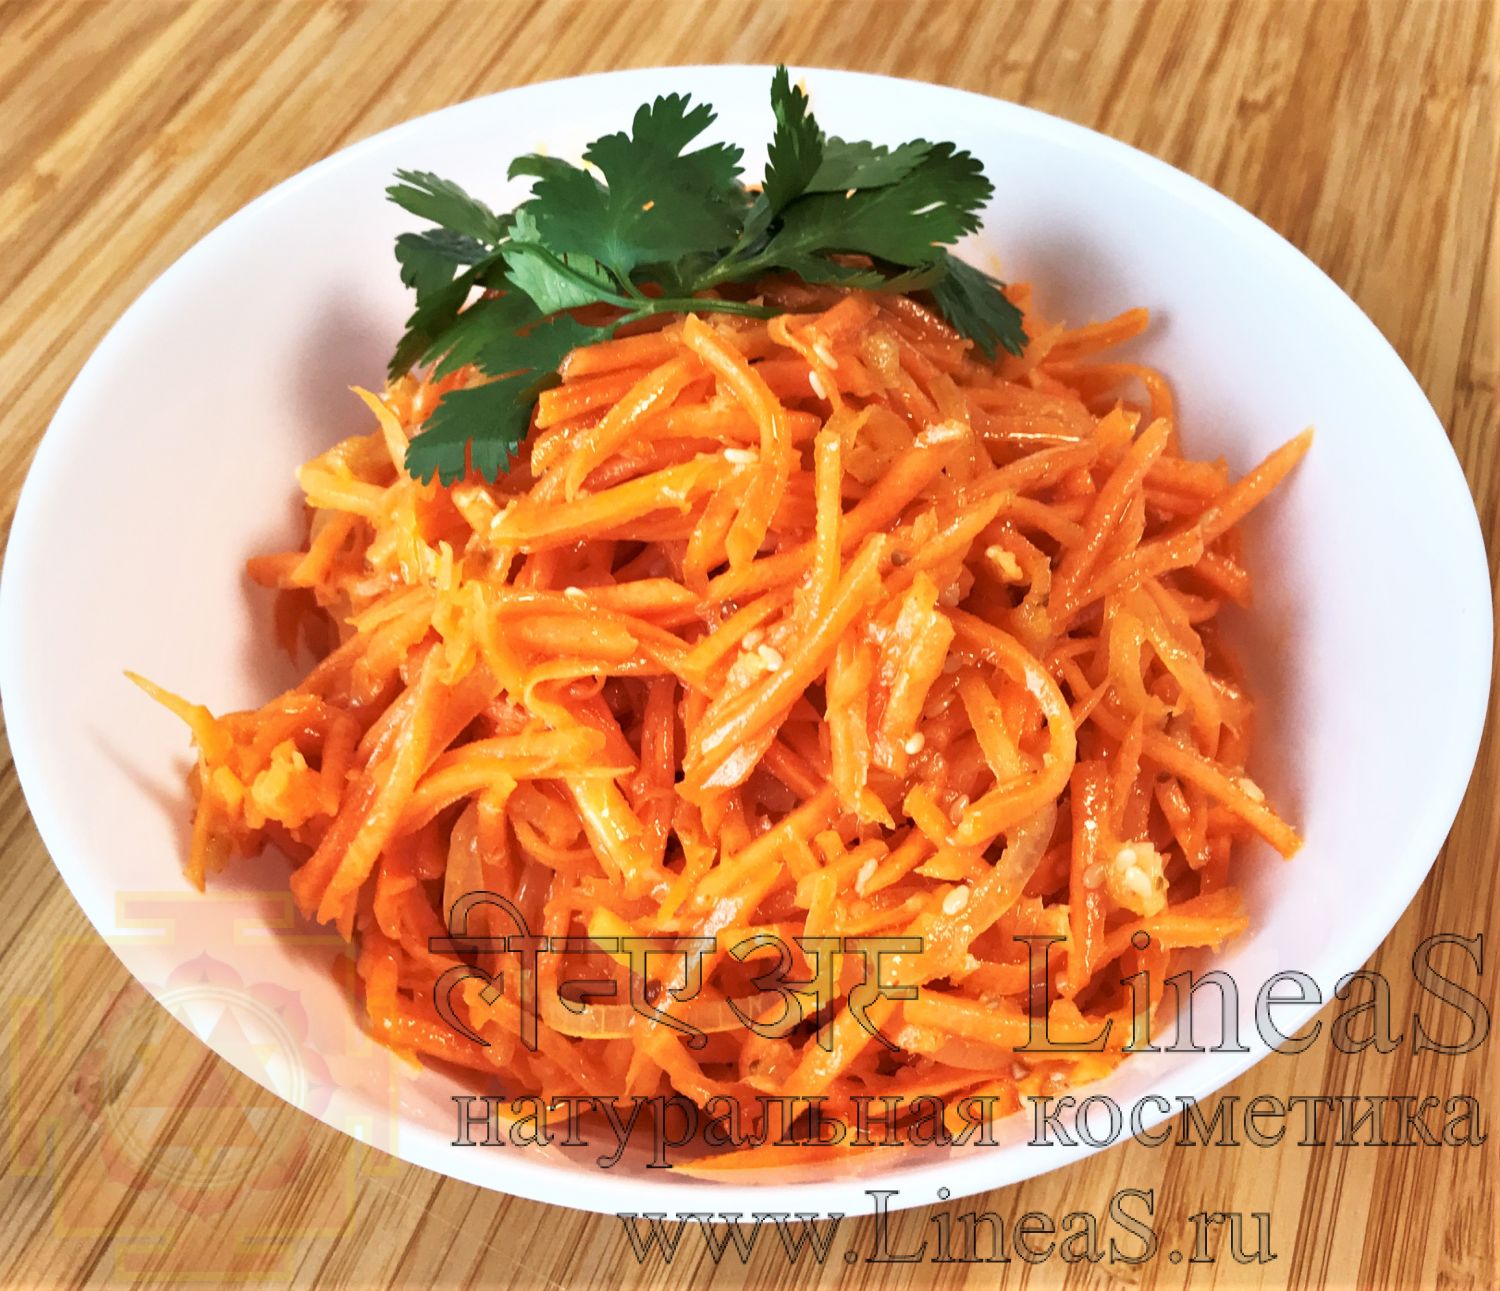 морковь по-корейски рецепт, рецепт с фото морковь по-корейски, корейская морковь своими руками, домашняя морковь по-корейски 